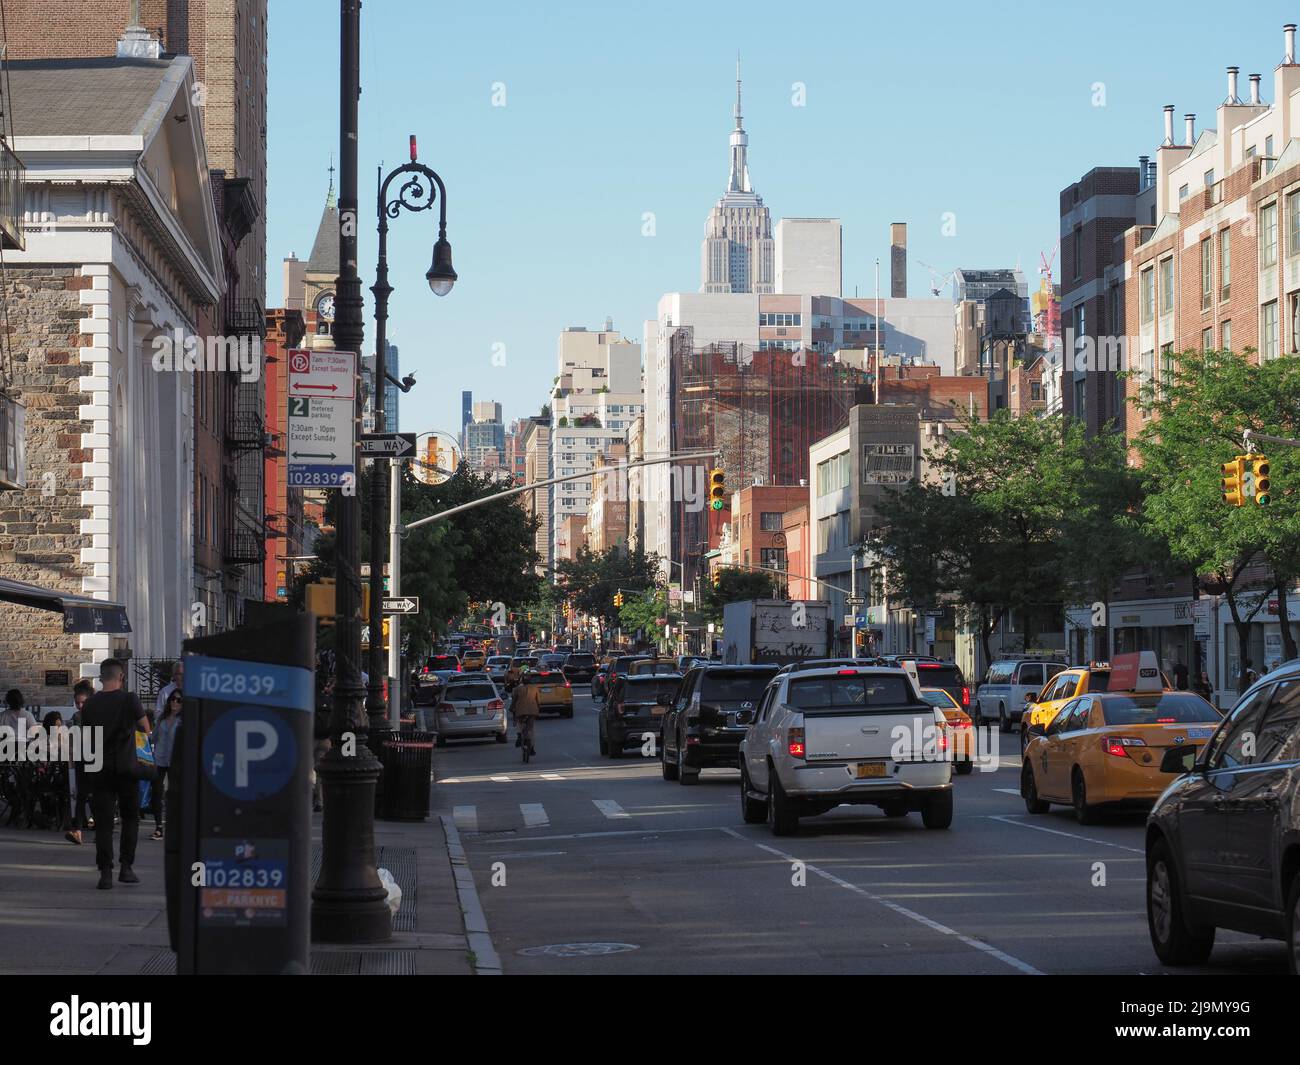 Image taken in the Greenwich Village area in Manhattan. Stock Photo